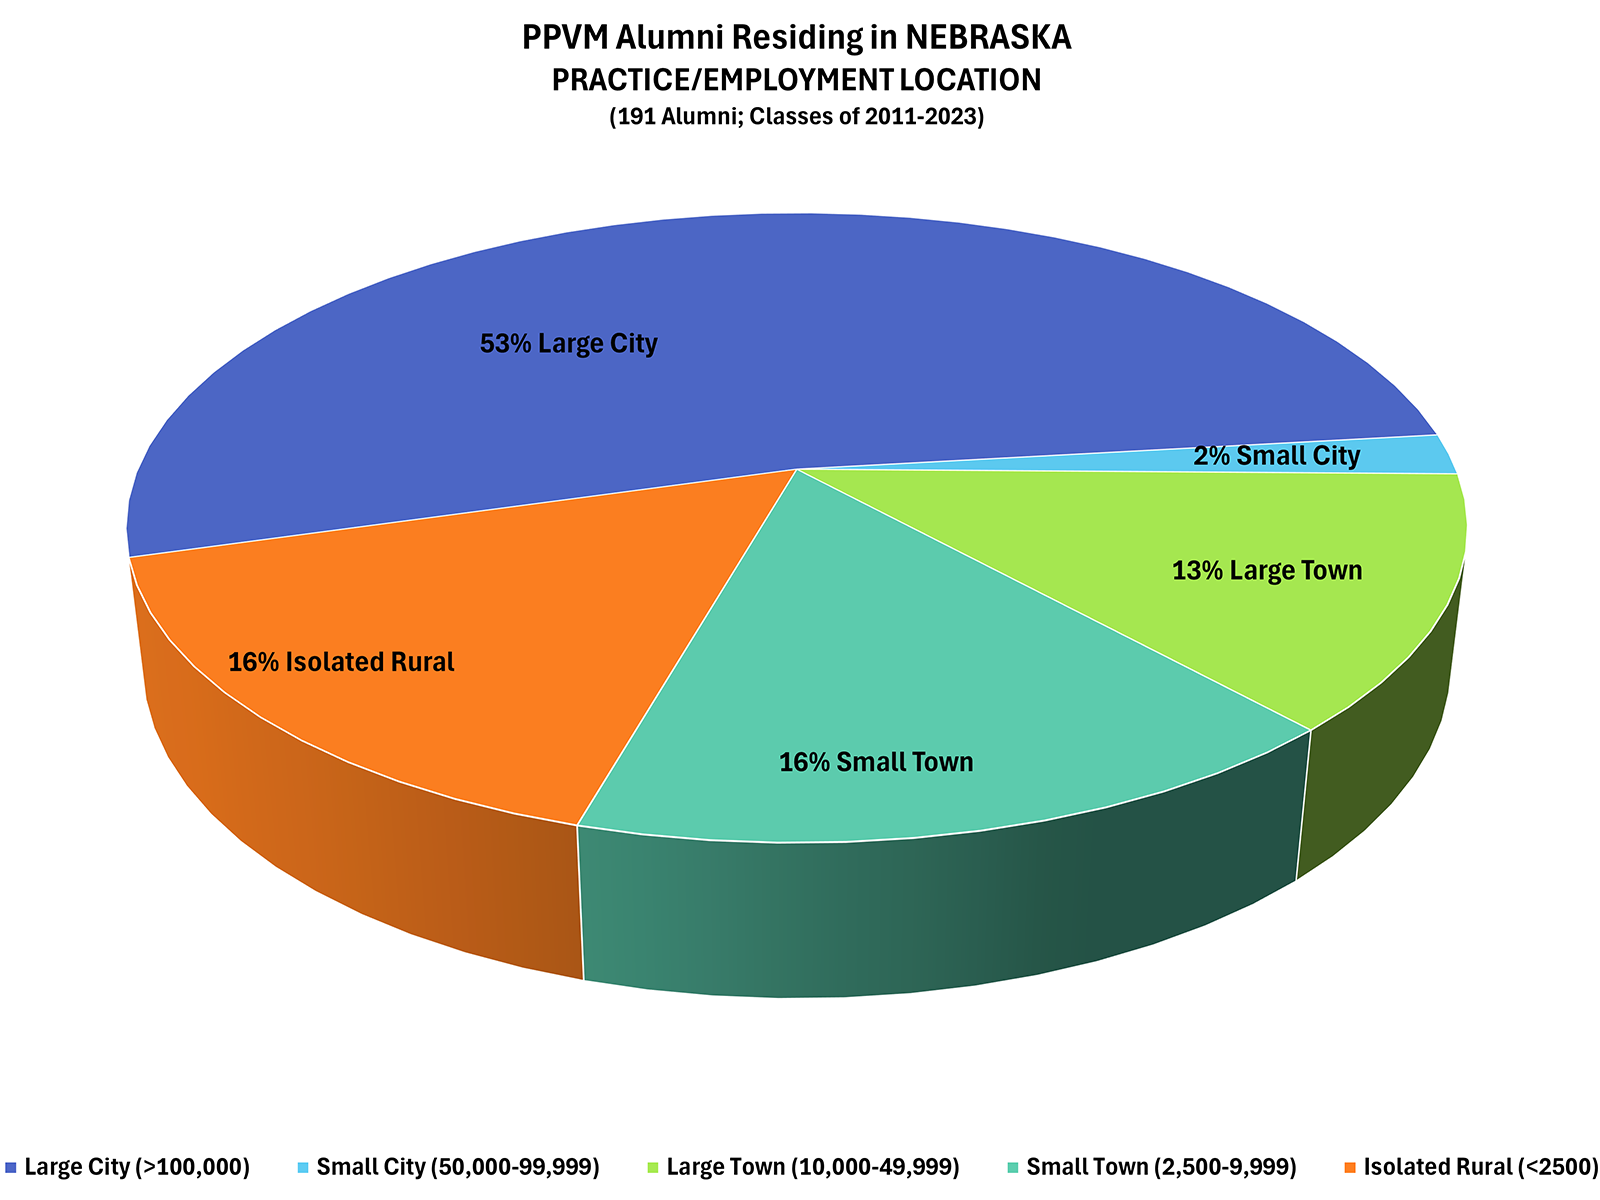 Pie chart showing distribution of practice location for PPVM Alumni practicing in Nebraska